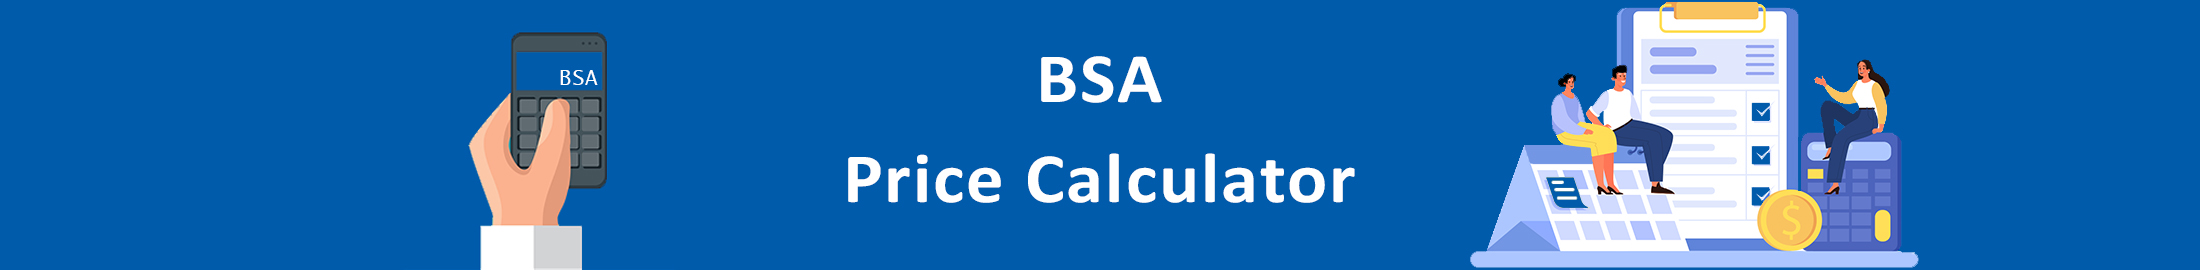 BSA Price Calculator Banner